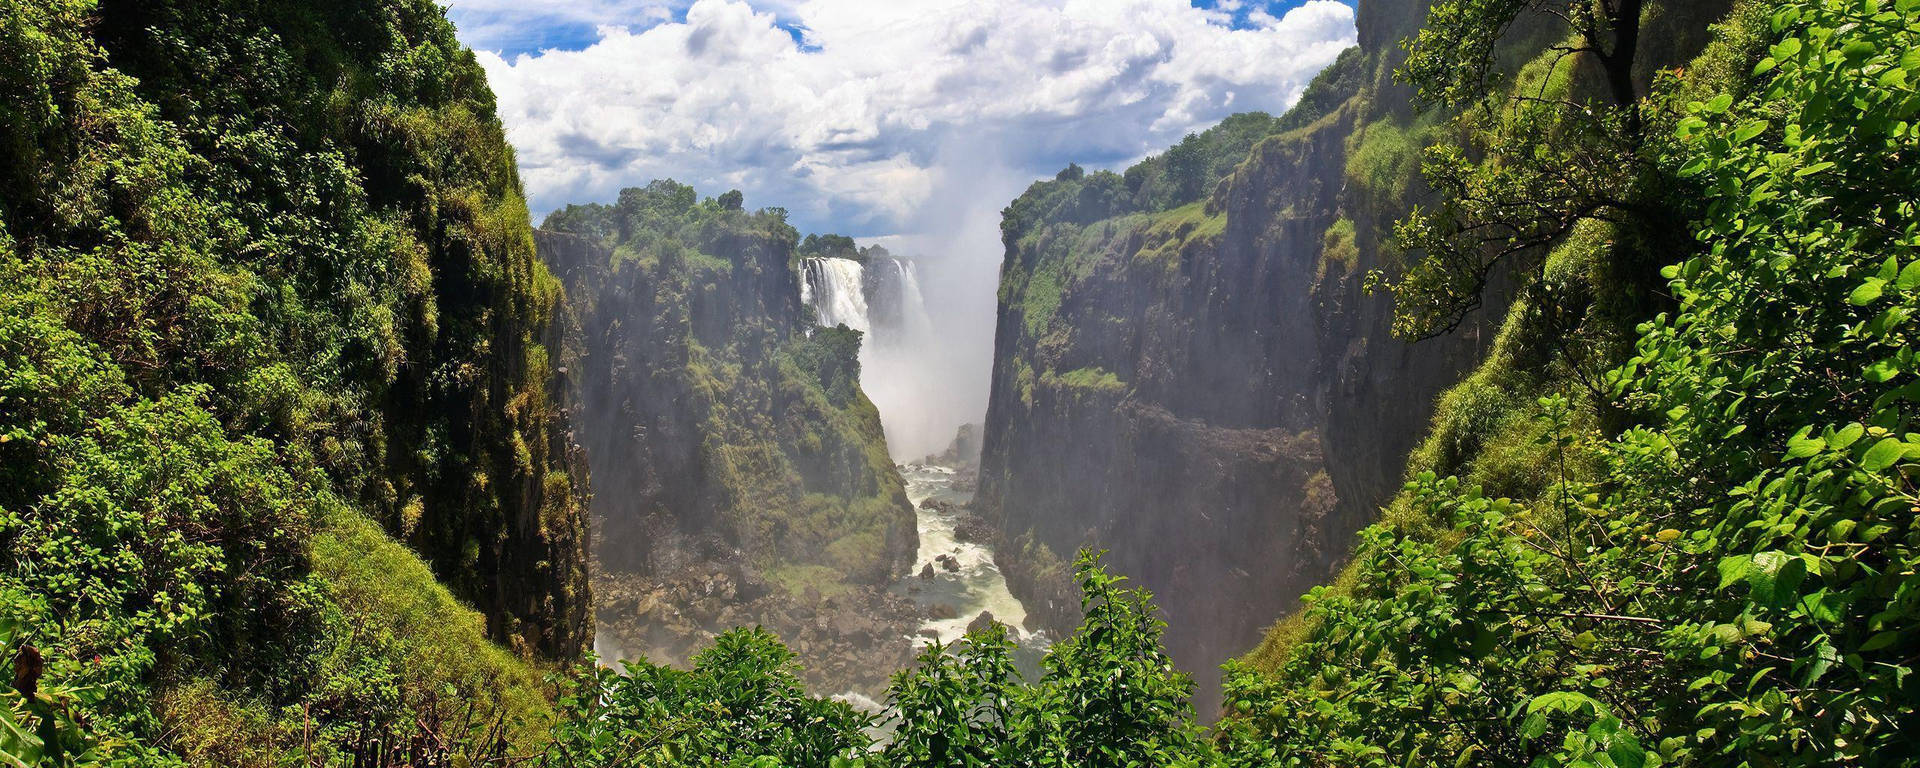 Nigeria Waterfall Gorge Background